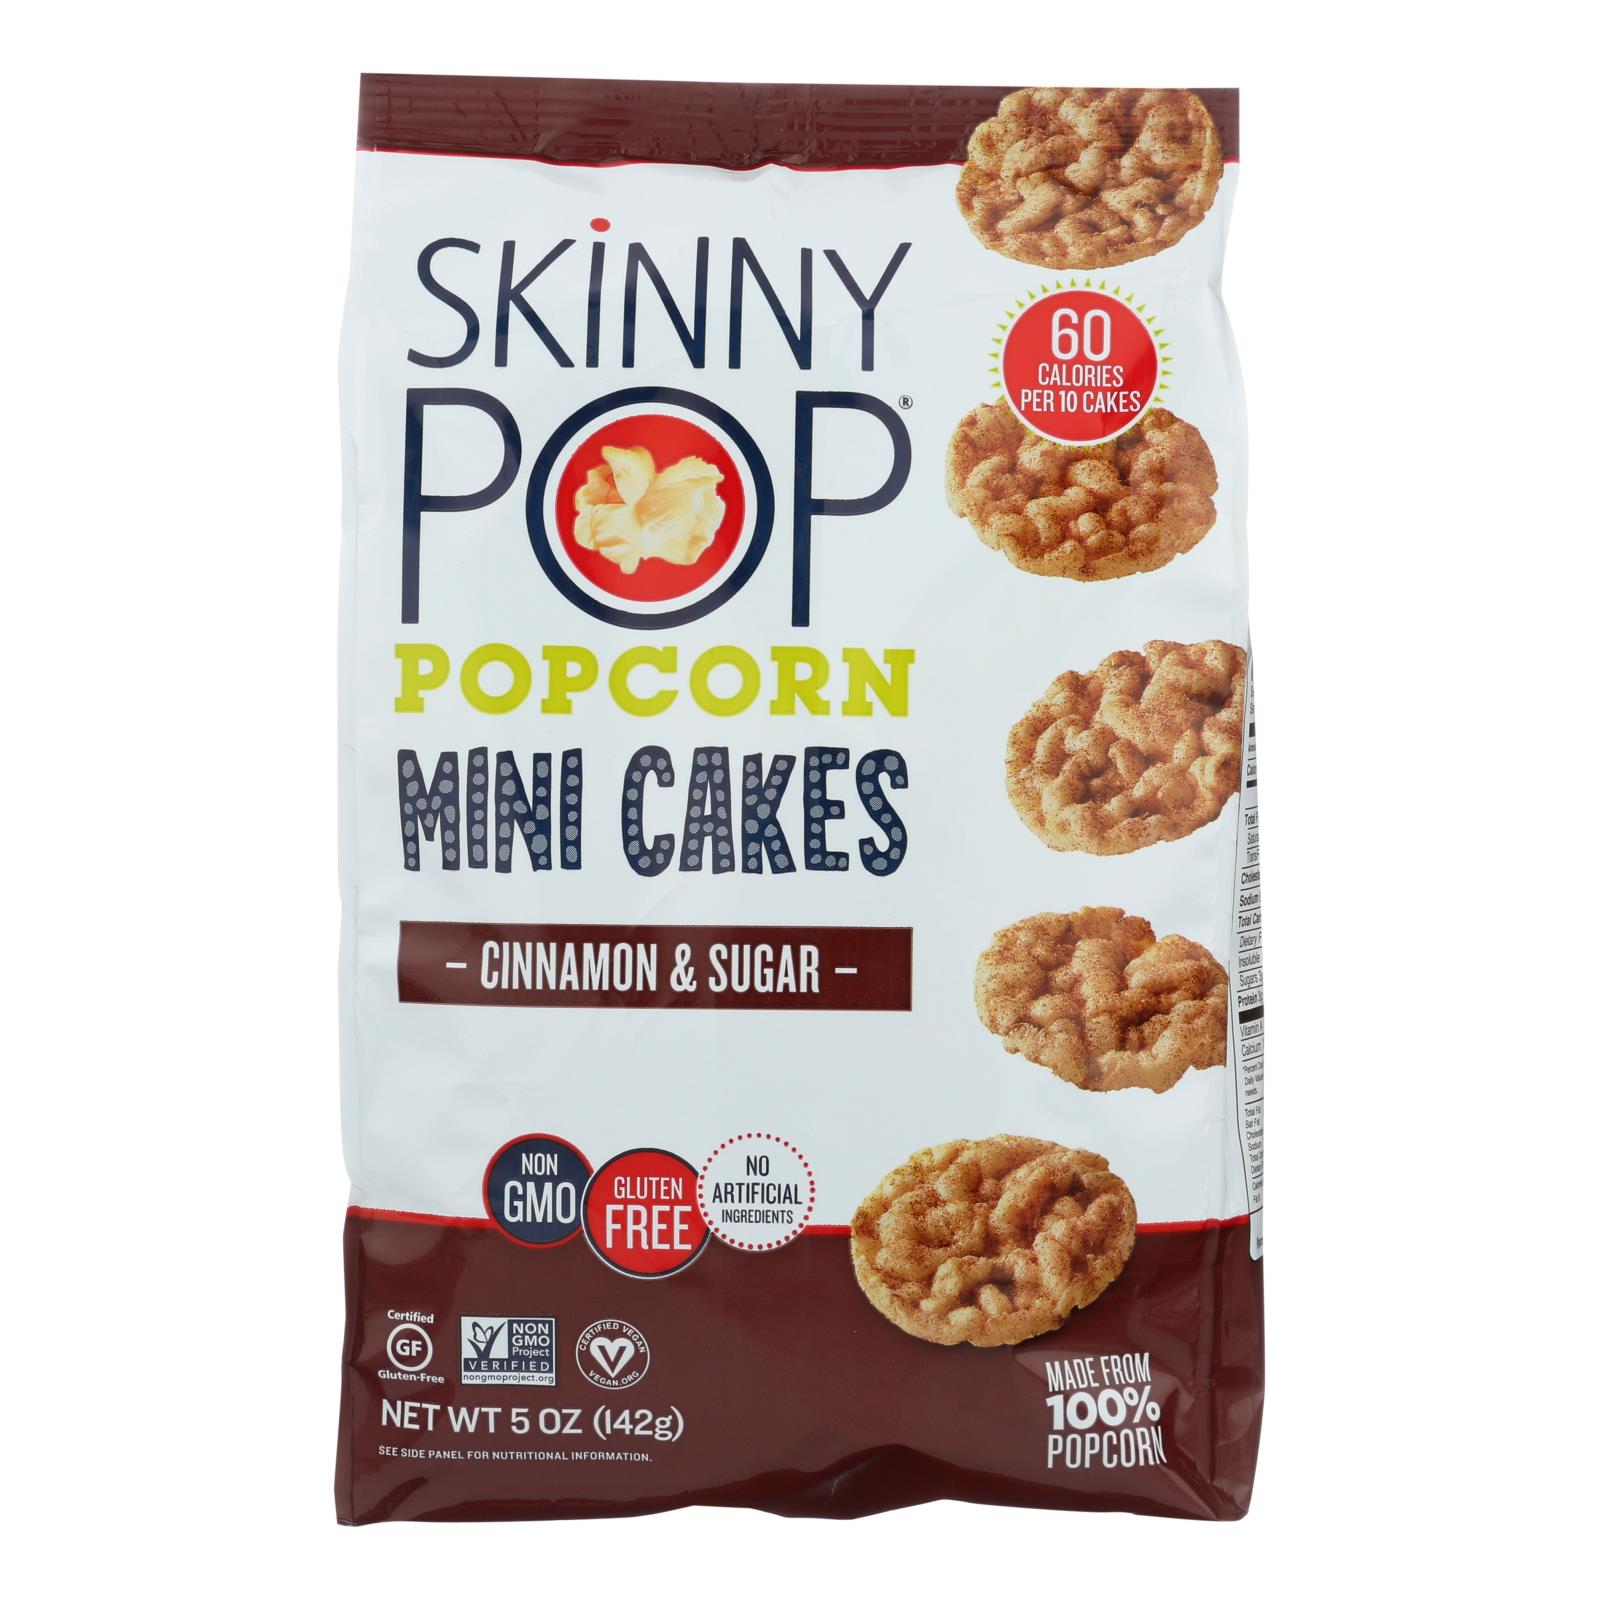 Skinnypop Popcorn - Popcorn Mini Cakes Cin&sugr - 4개 묶음상품-5 OZ